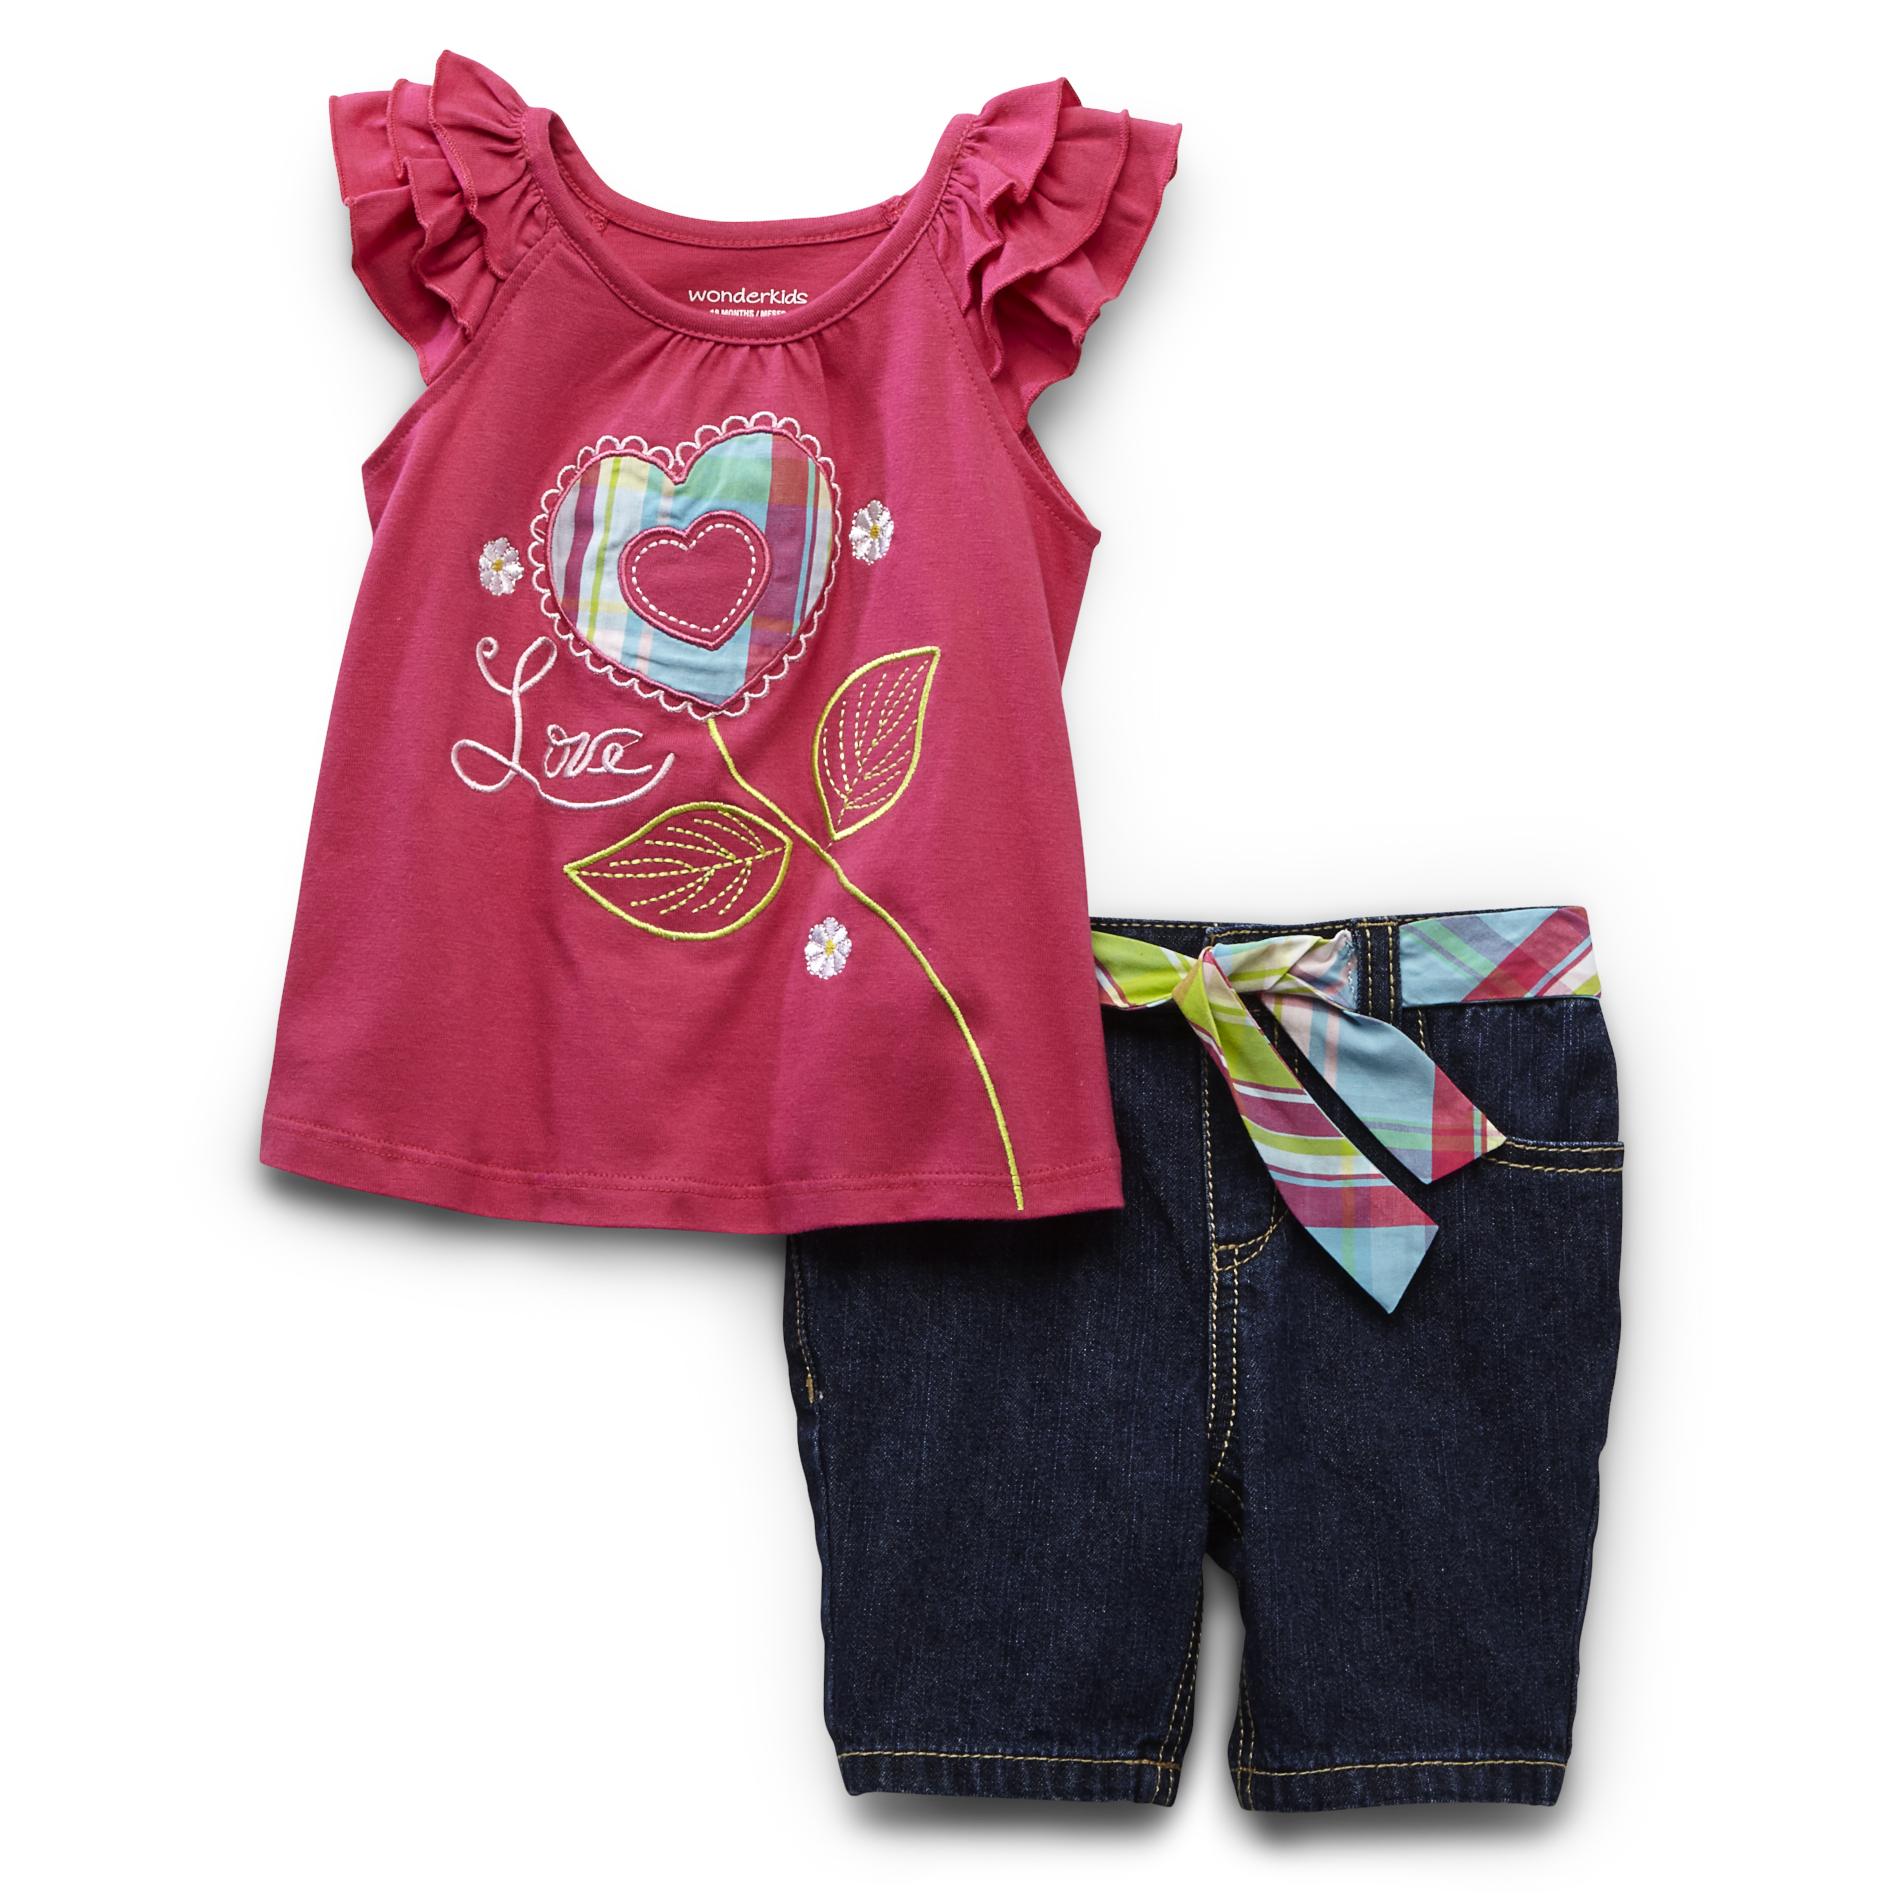 WonderKids Infant & Toddler Girl's Top & Jean Shorts - Love